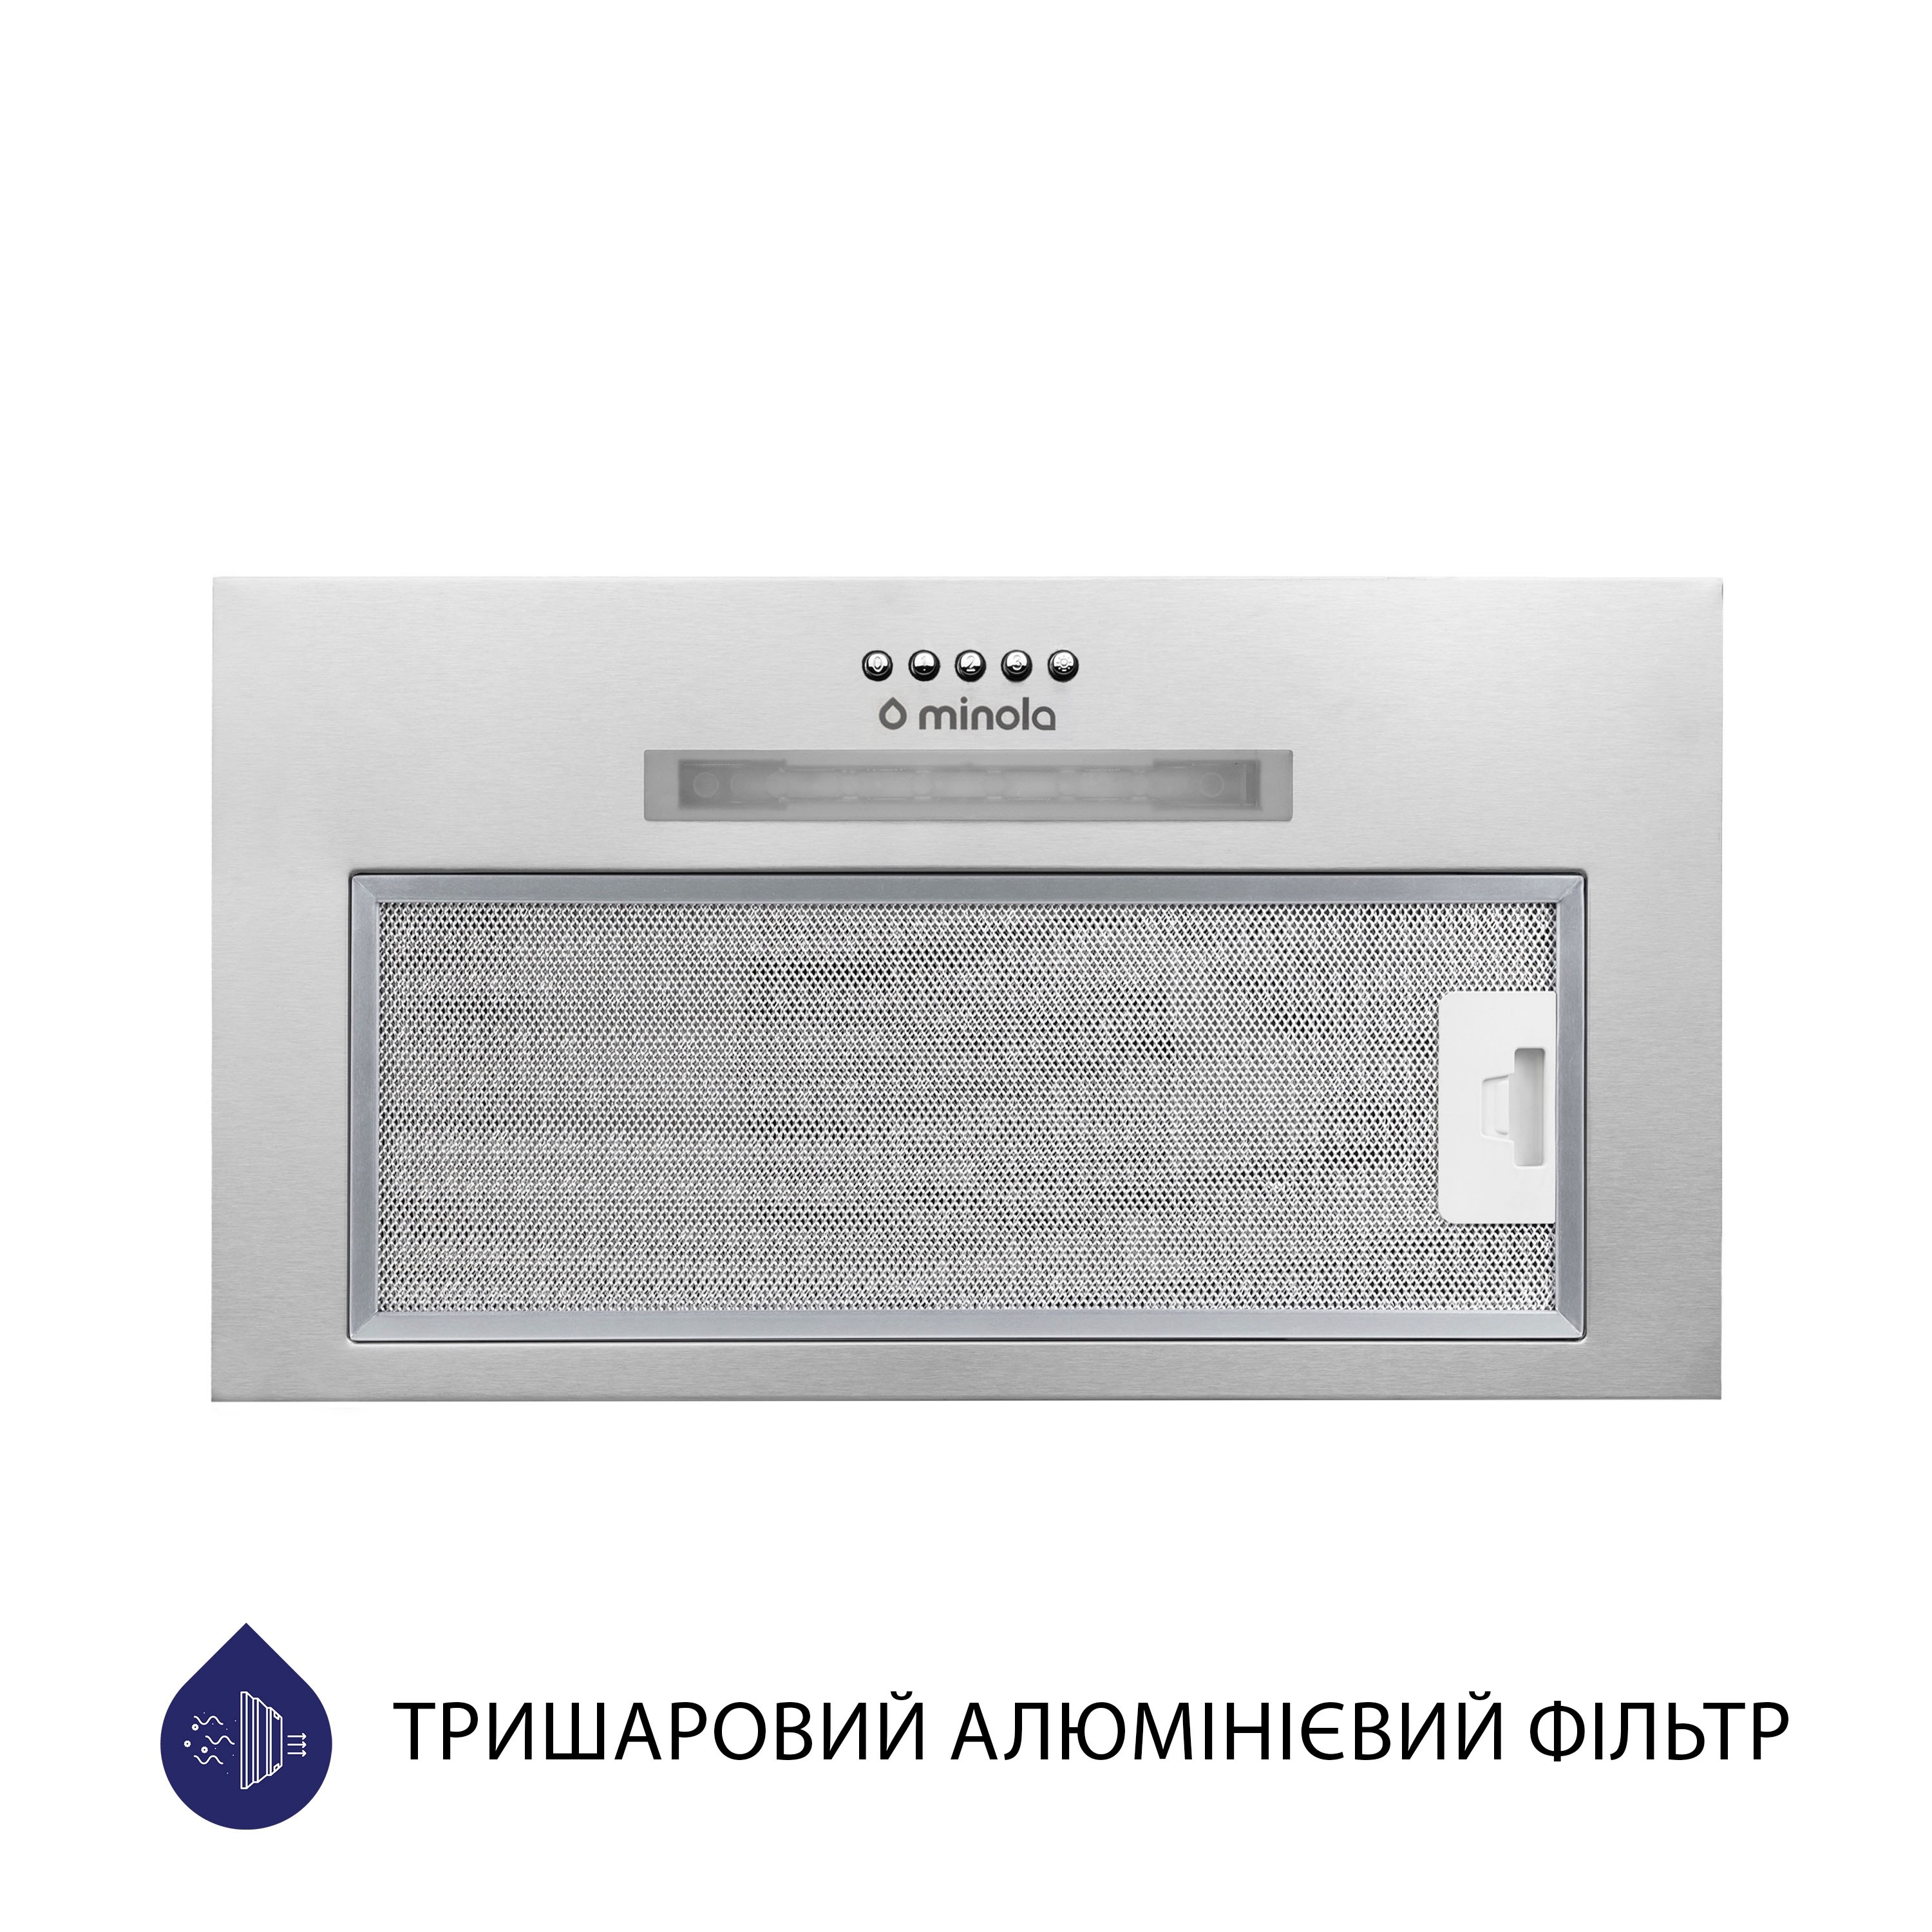 Витяжка кухонная полновстраиваемая Minola HBI 5223 I 700 LED цена 3399.00 грн - фотография 2